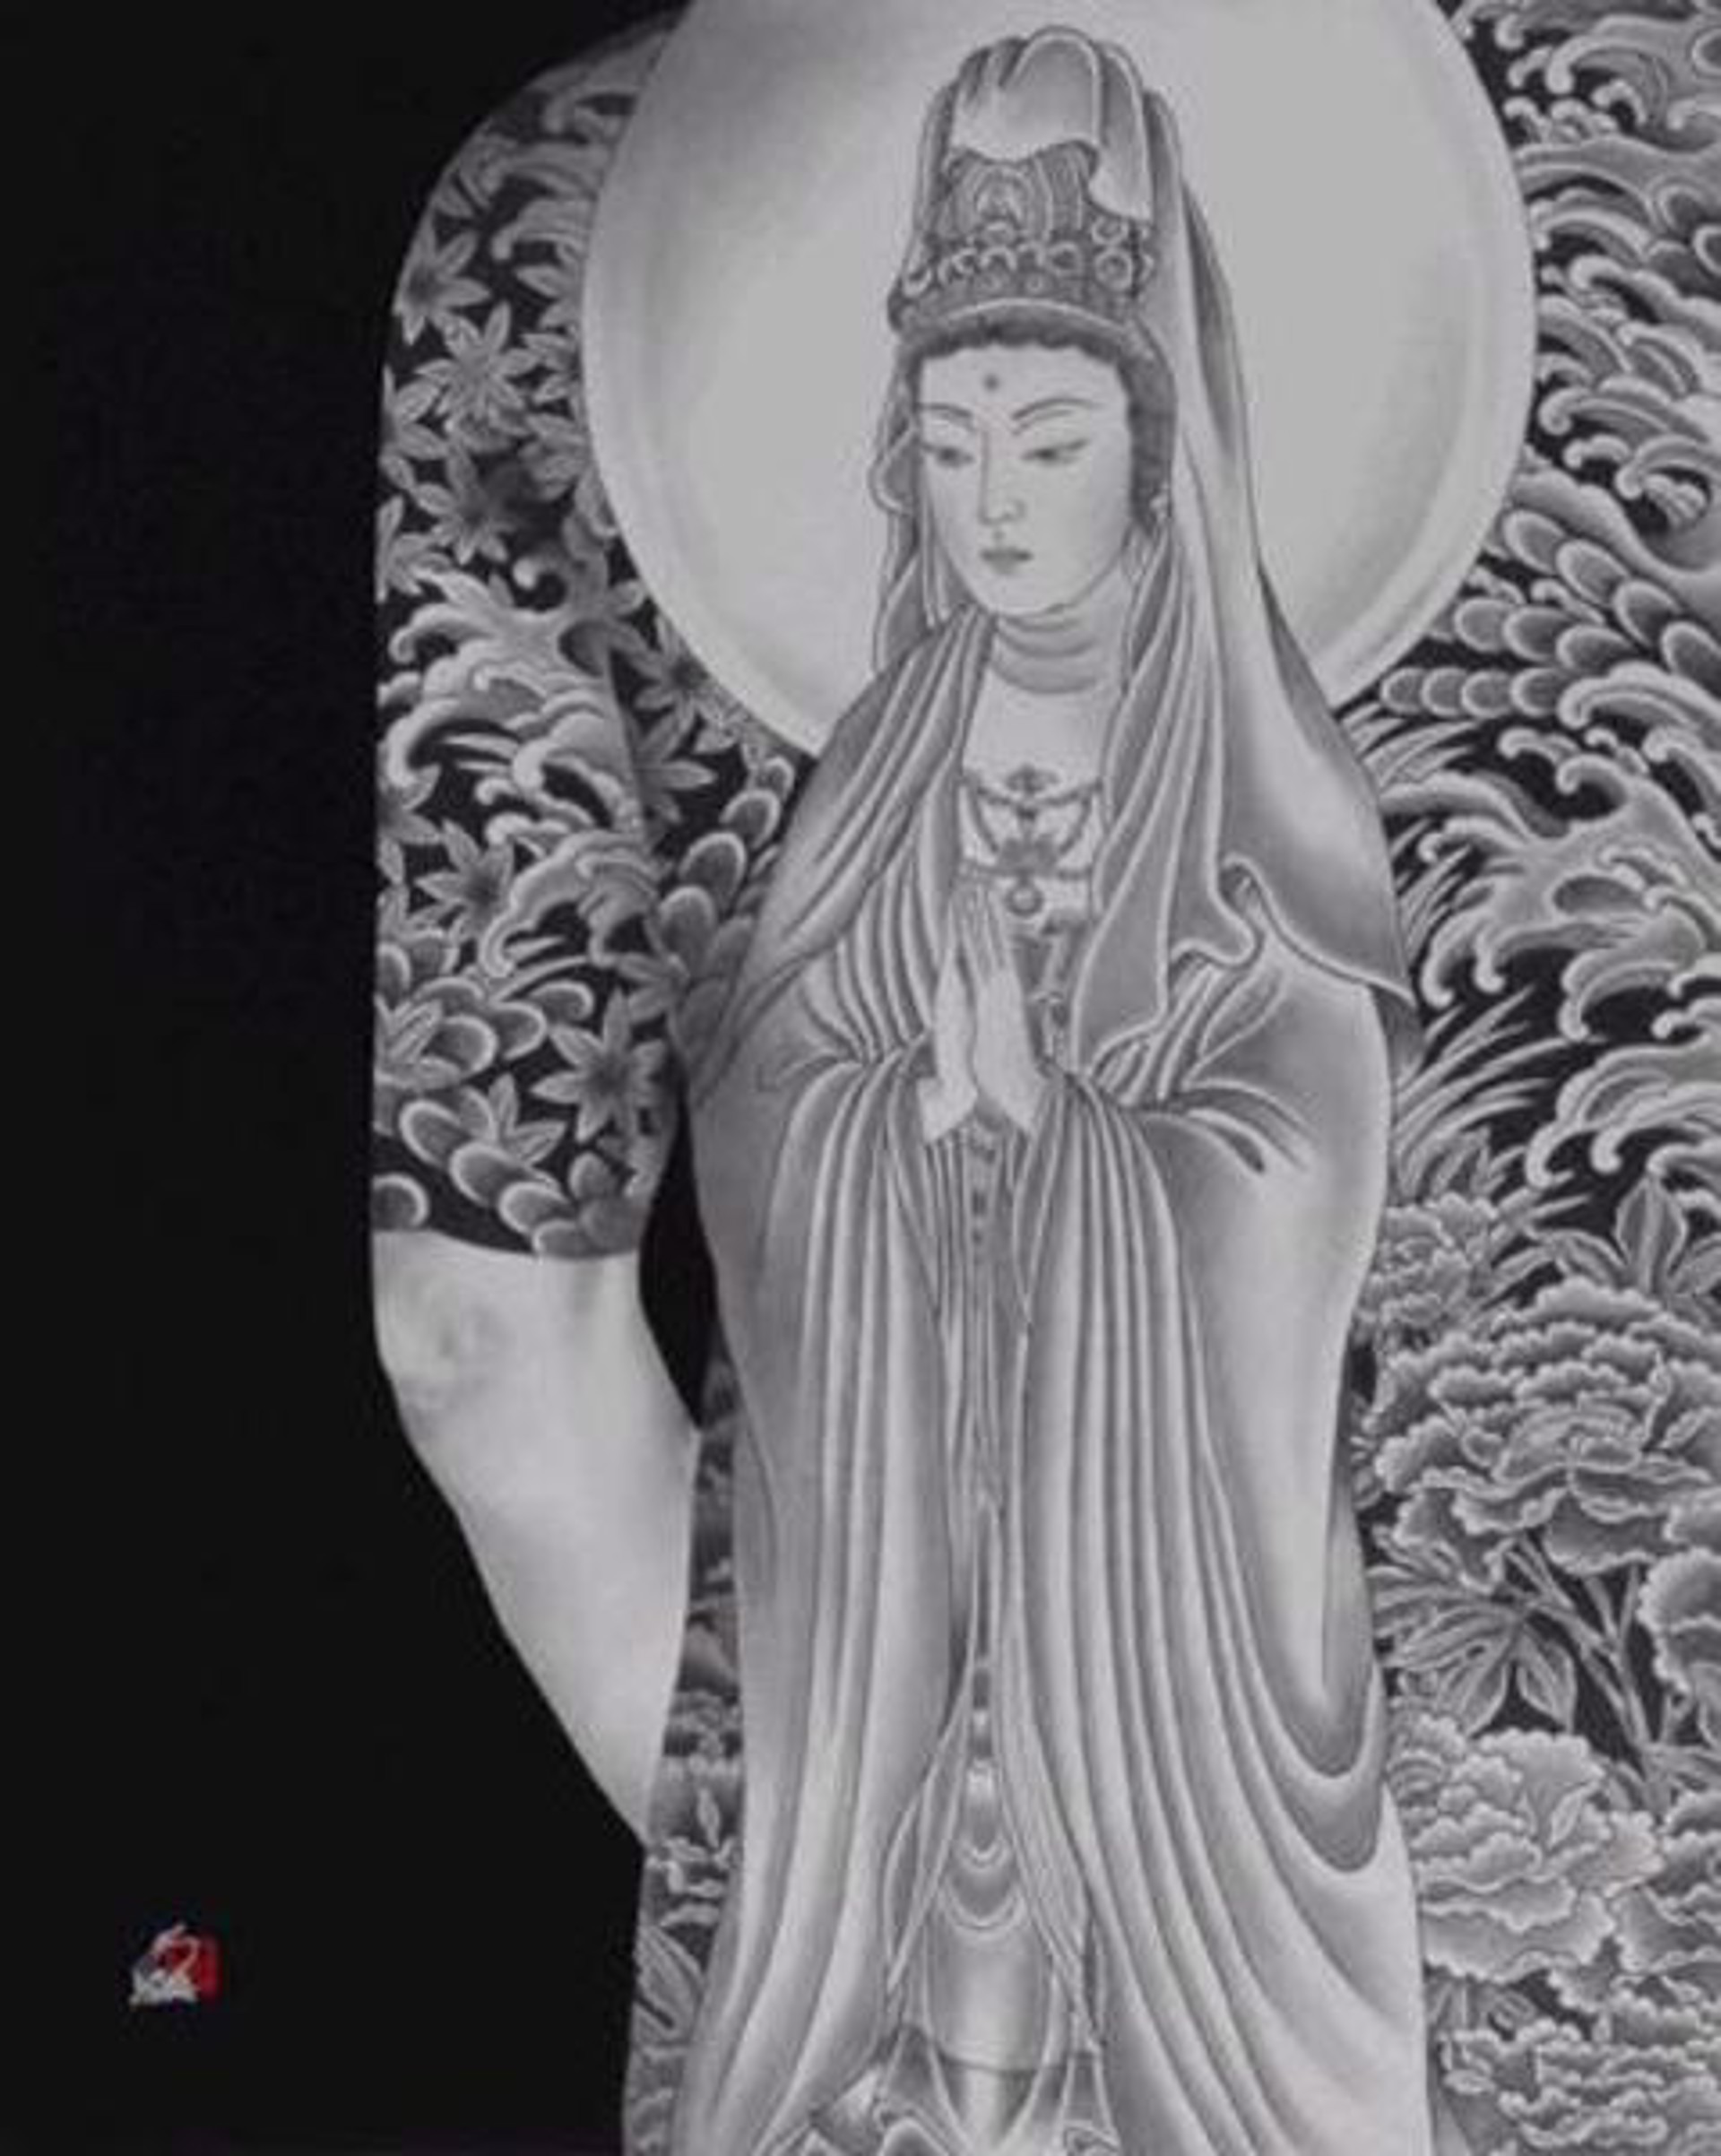 The Goddess of Compassion by Hisashi Otsuka